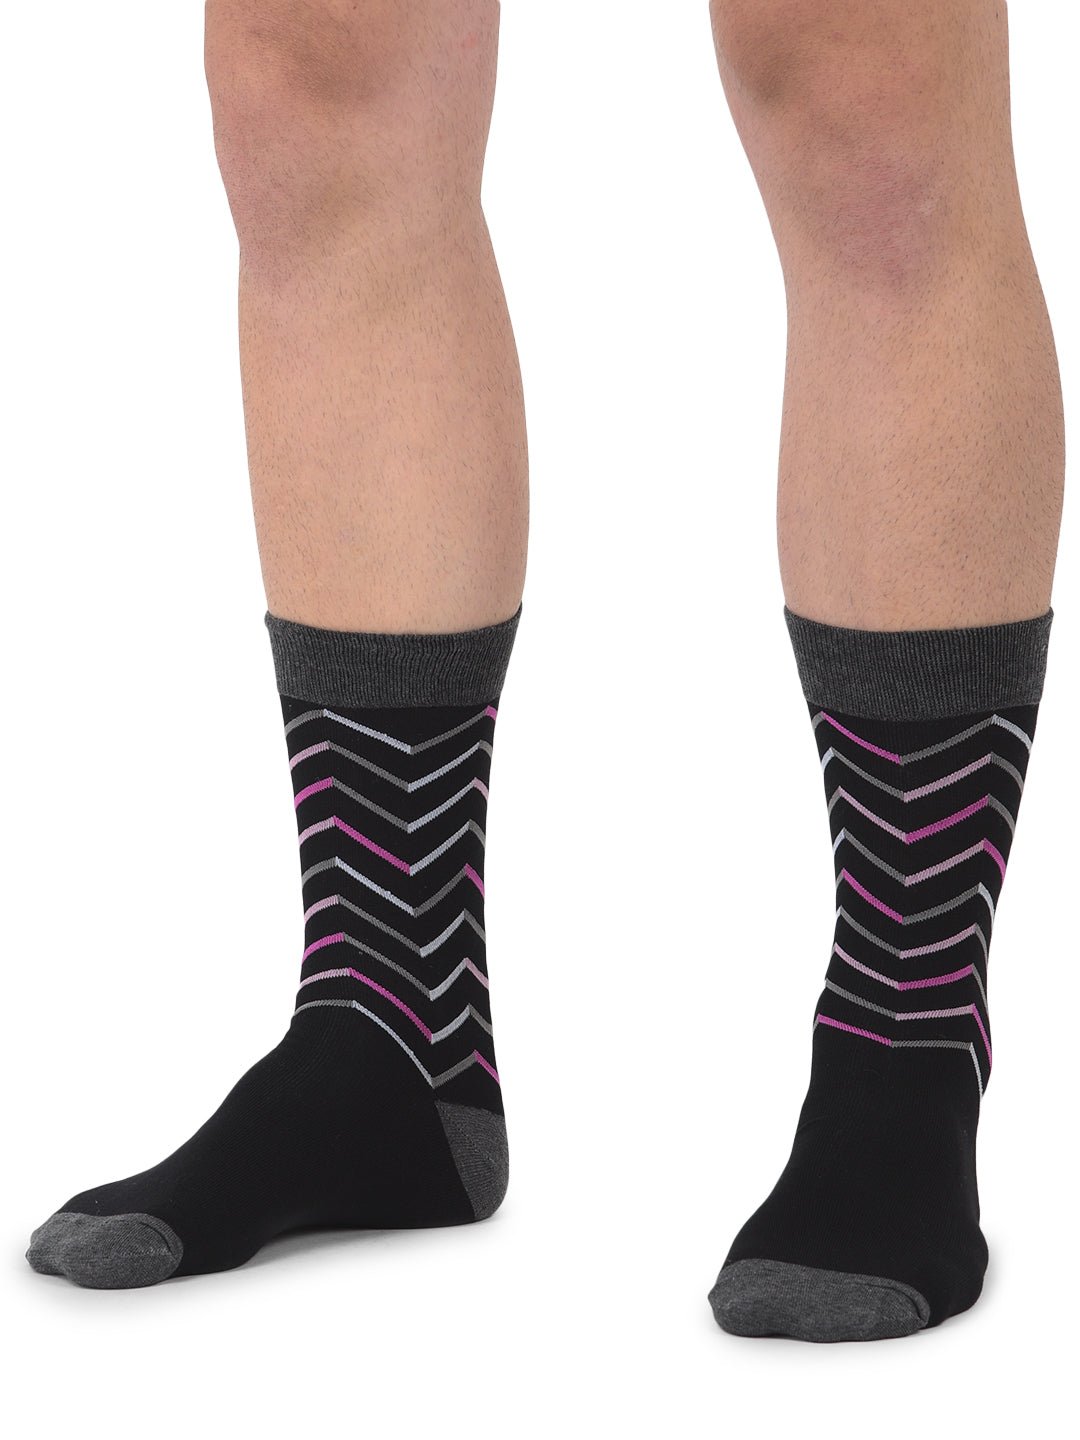 Men's Formal Crew Length Socks, Black Colors and Zigzag Design, Free Size,Pack of 1 ( Black )